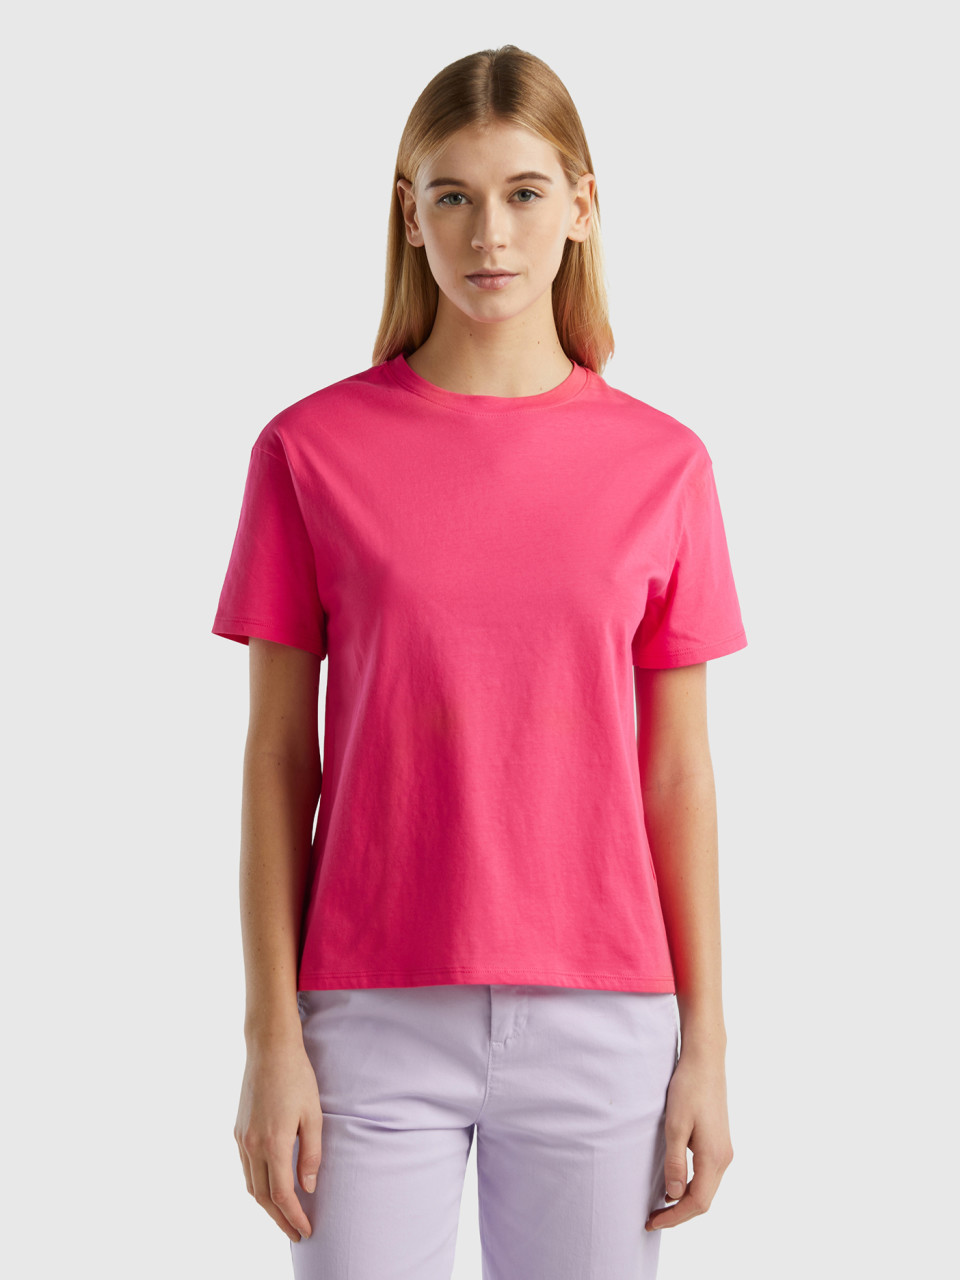 Benetton, Short Sleeve 100% Cotton T-shirt, Fuchsia, Women